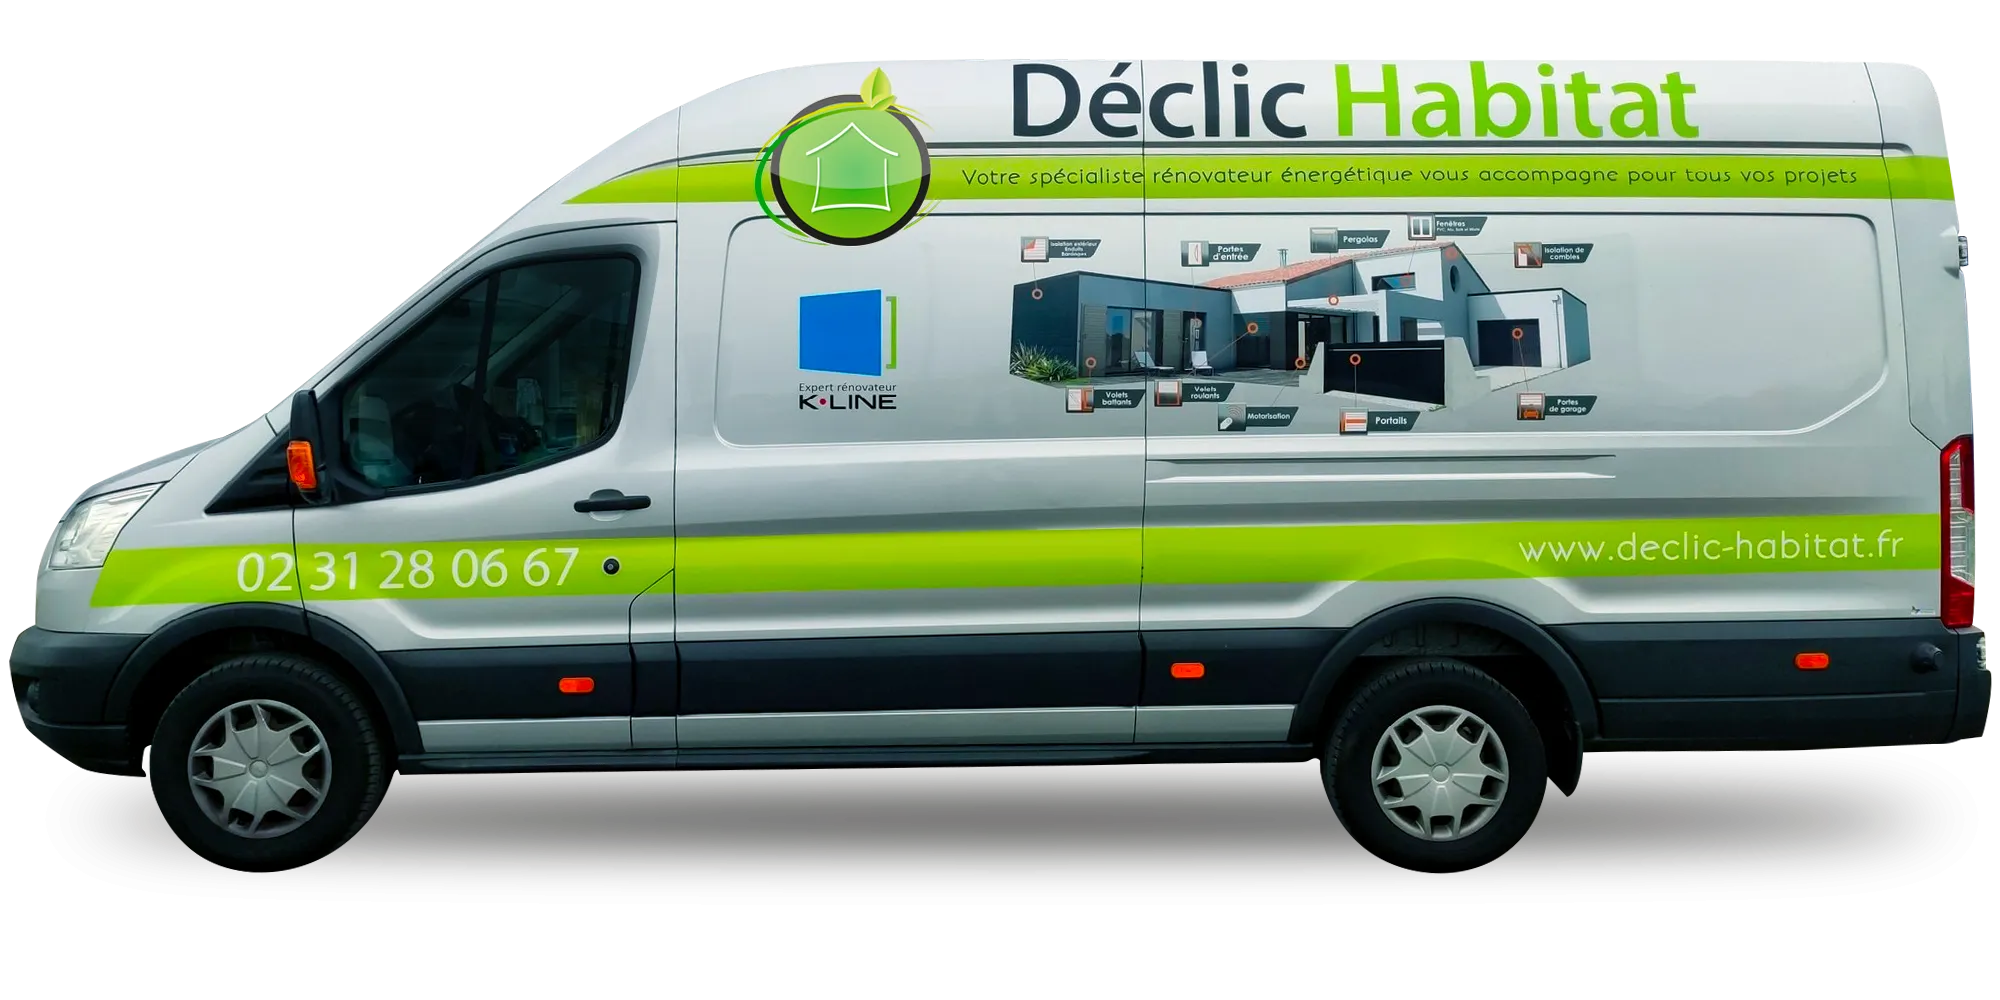 Camion Déclic Habitat